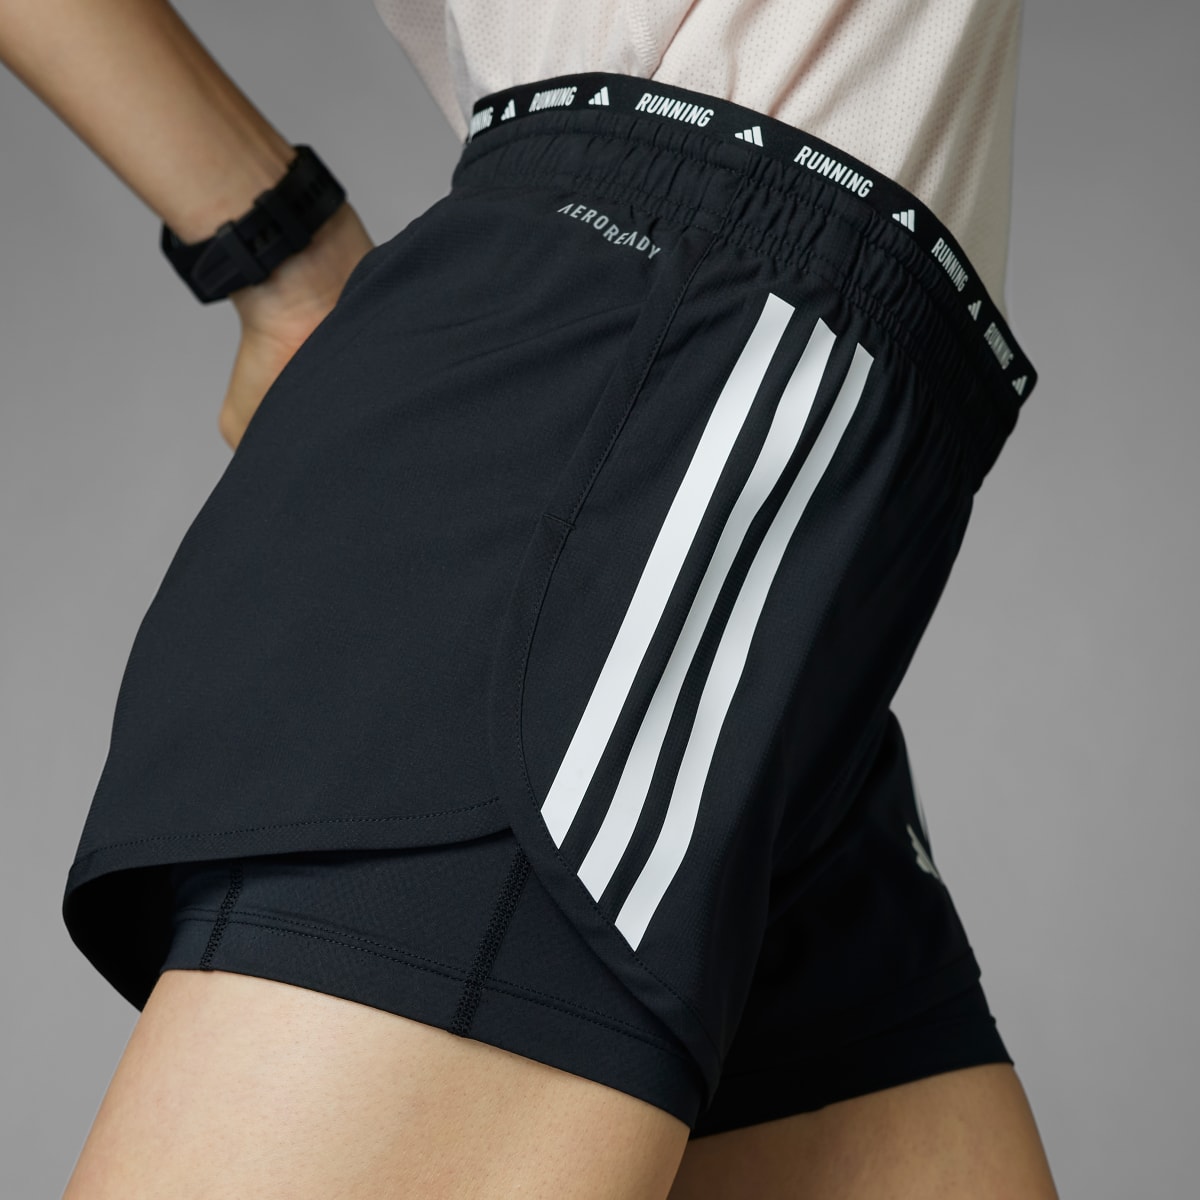 Adidas Own the Run 3-Stripes 2-in-1 Shorts. 7